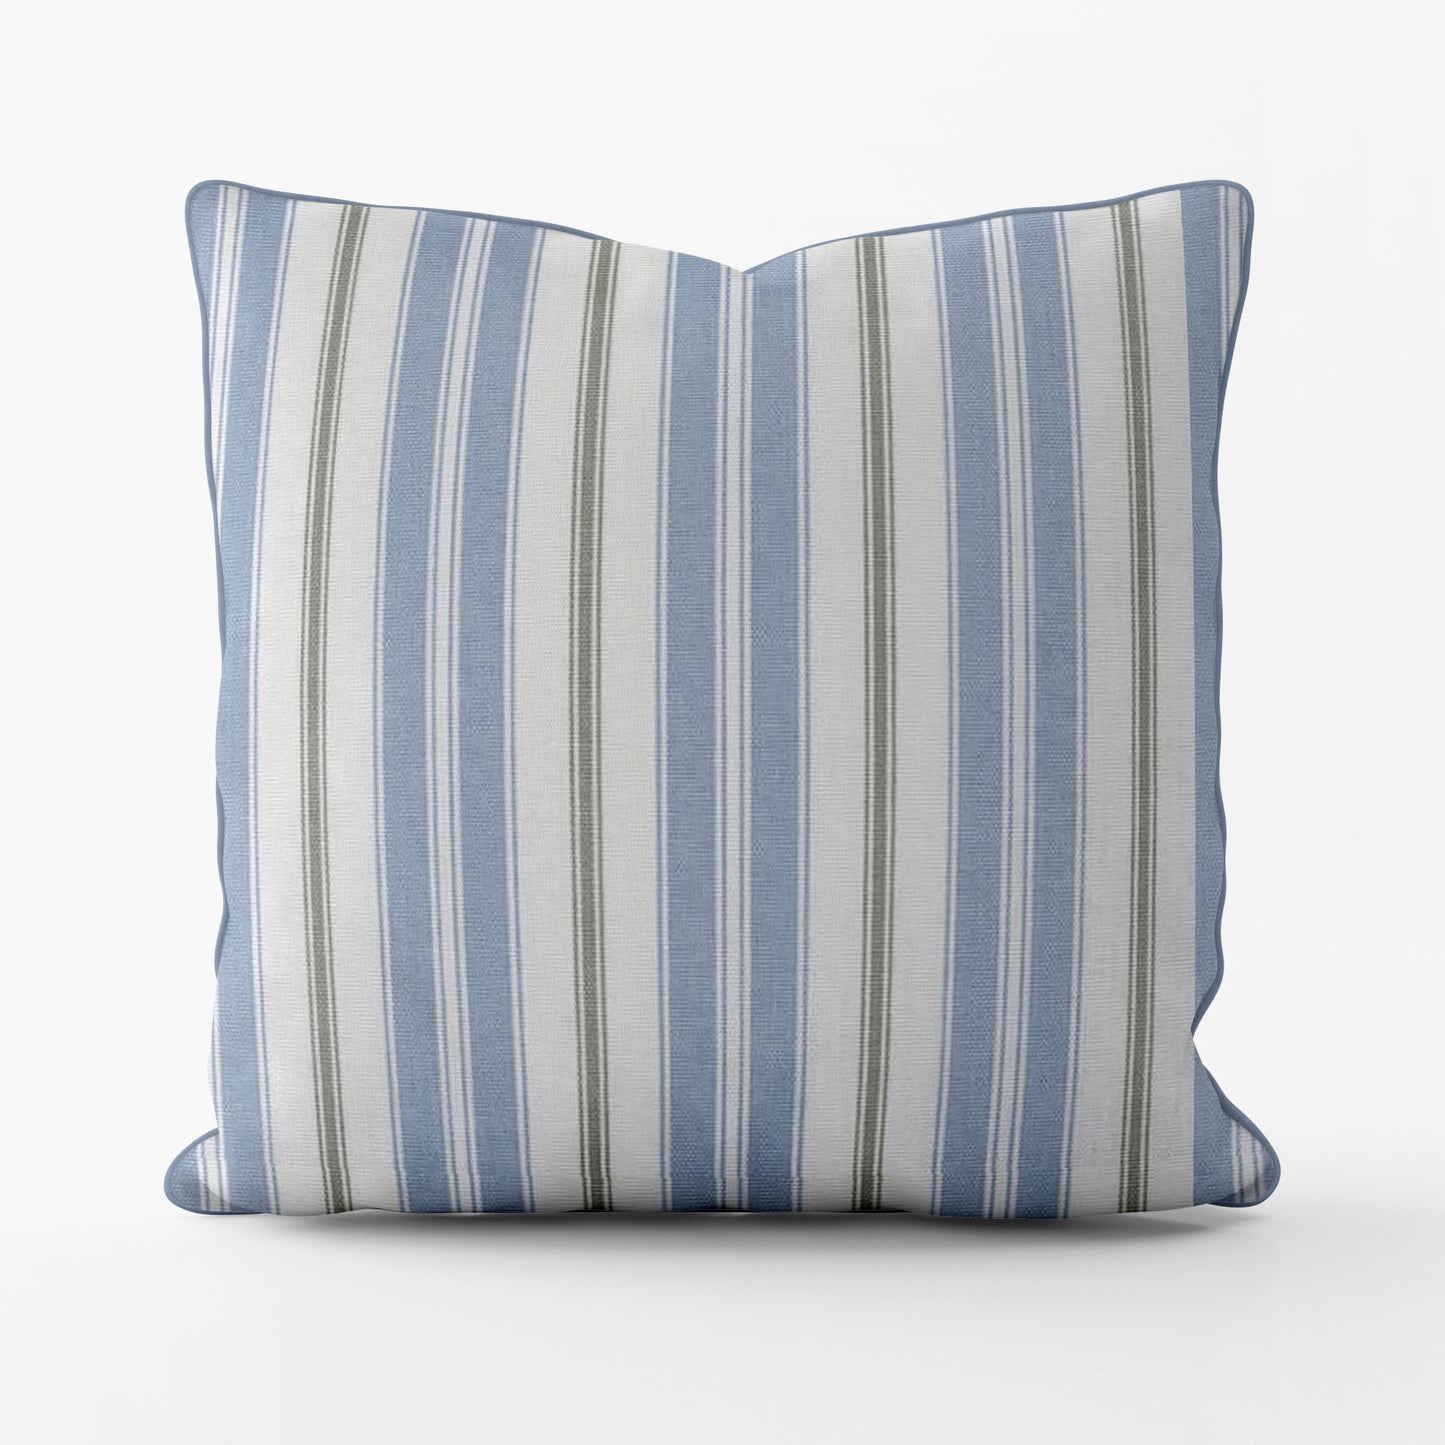 Decorative Pillows in Newbury Antique Blue Stripe- Blue, Green, White